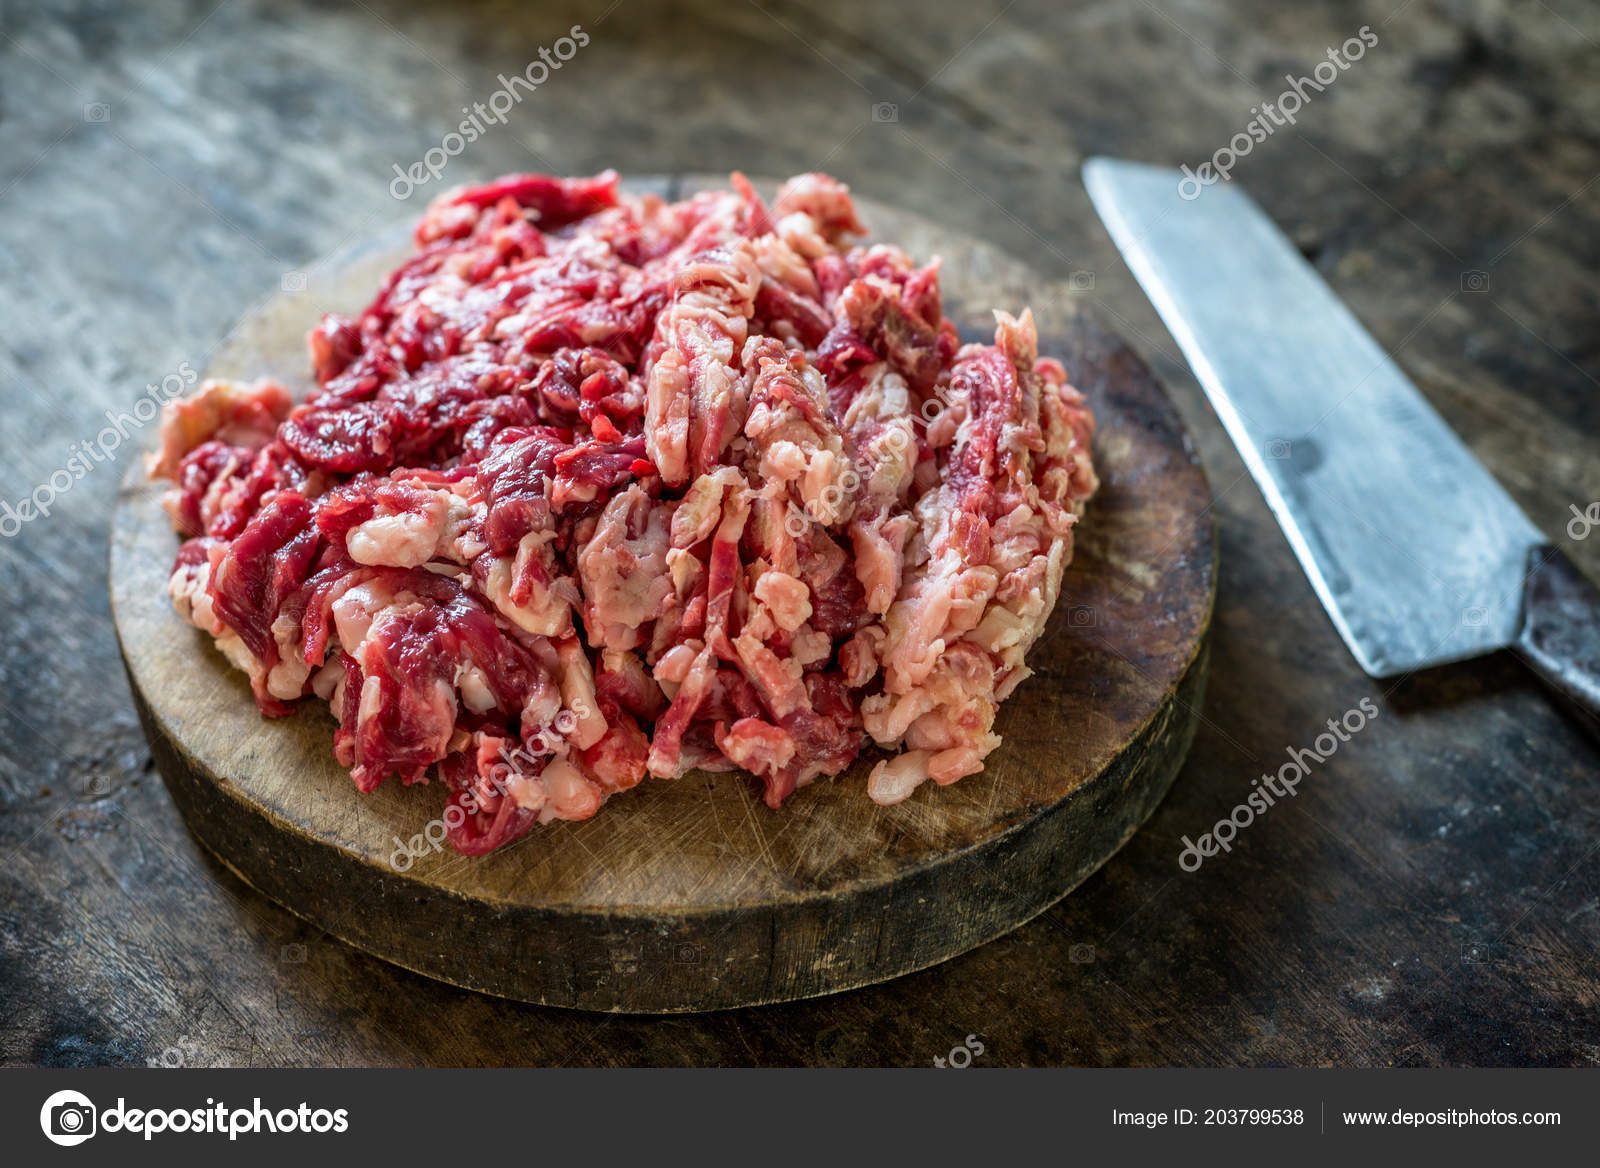 https://st4.depositphotos.com/3160779/20379/i/1600/depositphotos_203799538-stock-photo-shredded-raw-beef-cutting-board.jpg